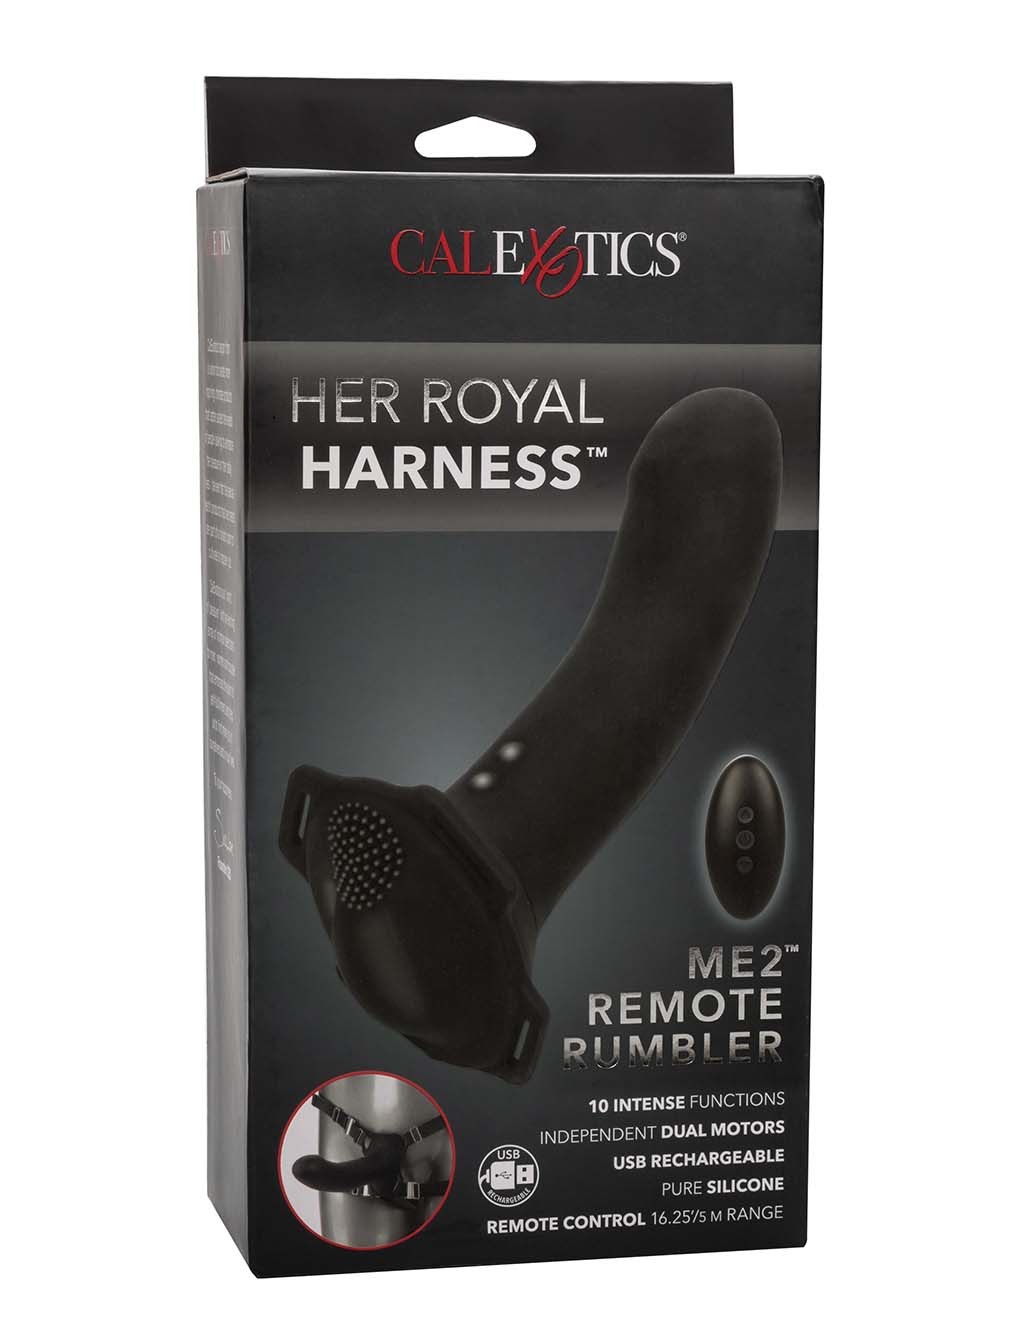 Her Royal Harness Me2 Remote Rumbler